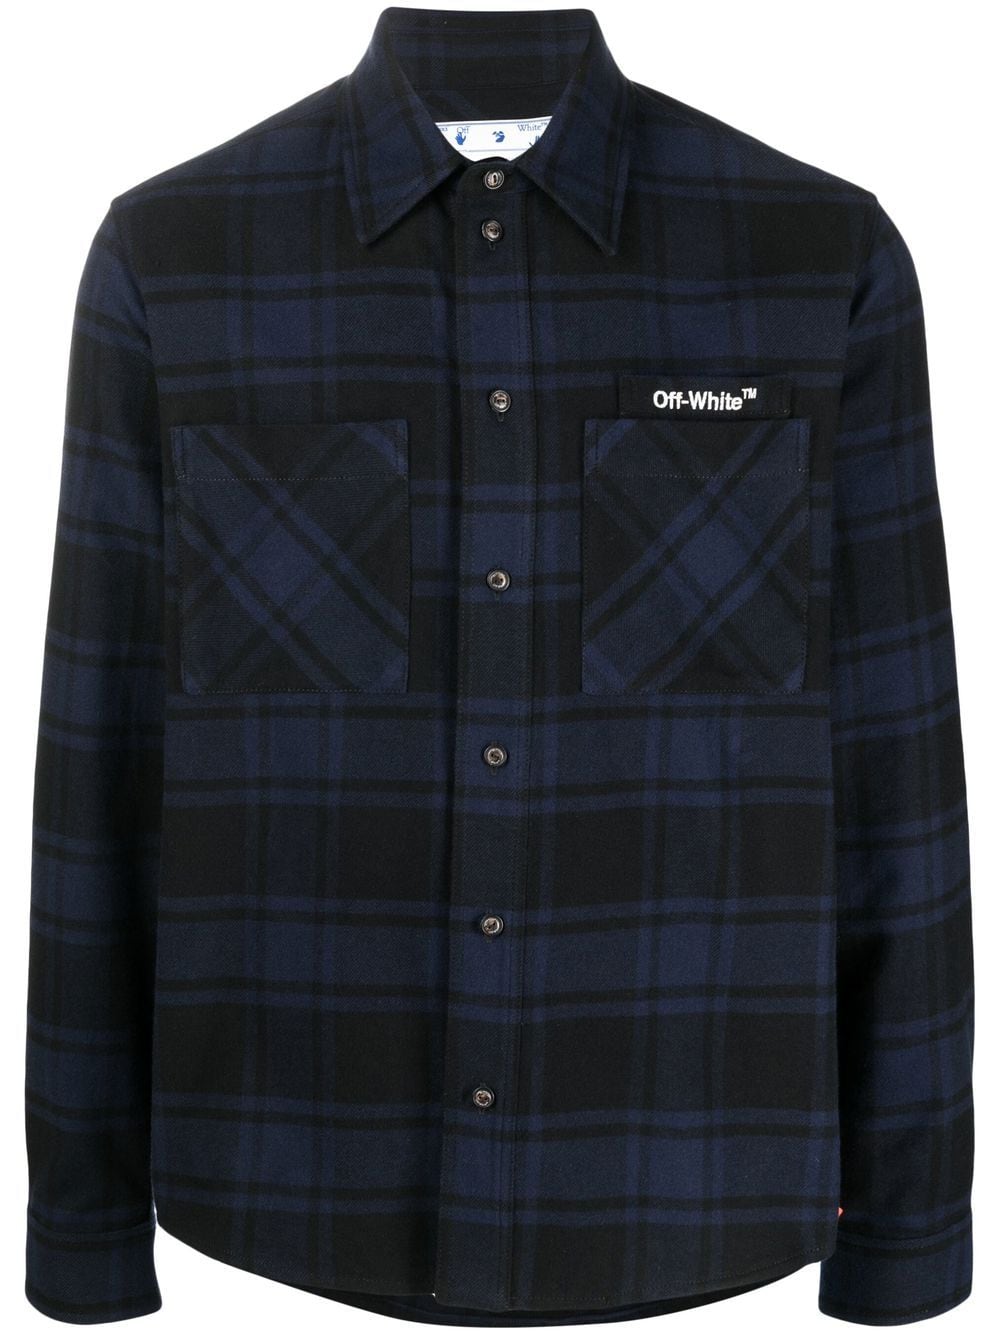 Arrows check-print flannel shirt